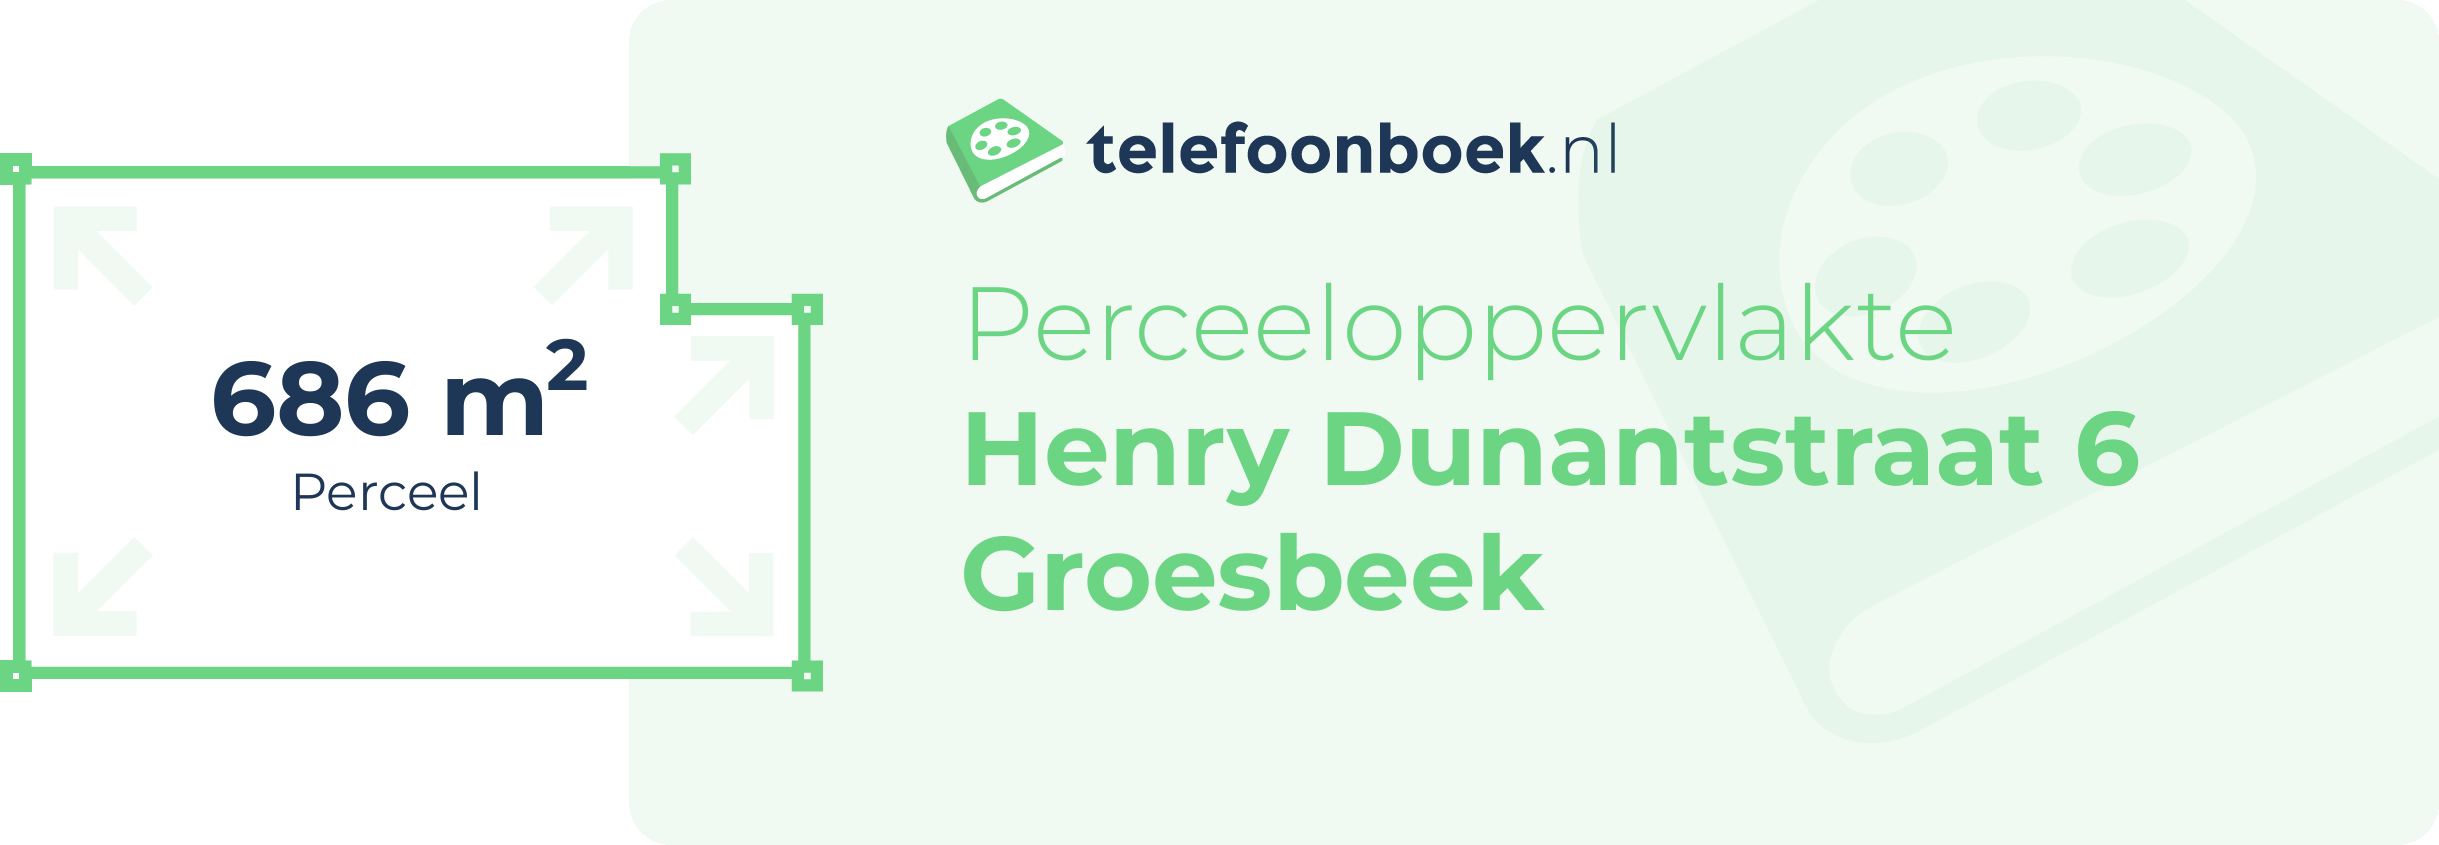 Perceeloppervlakte Henry Dunantstraat 6 Groesbeek